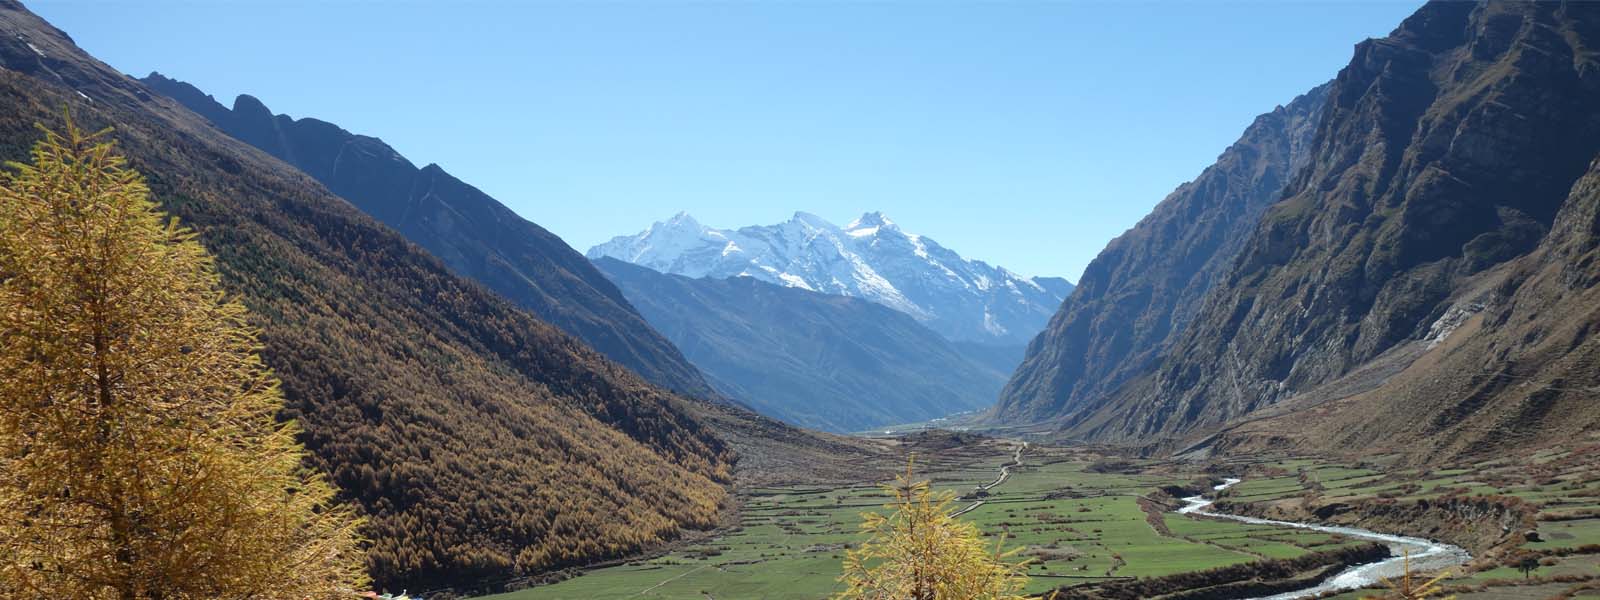 Tsum Valley and Manaslu (Larke-La Pass) Trek 